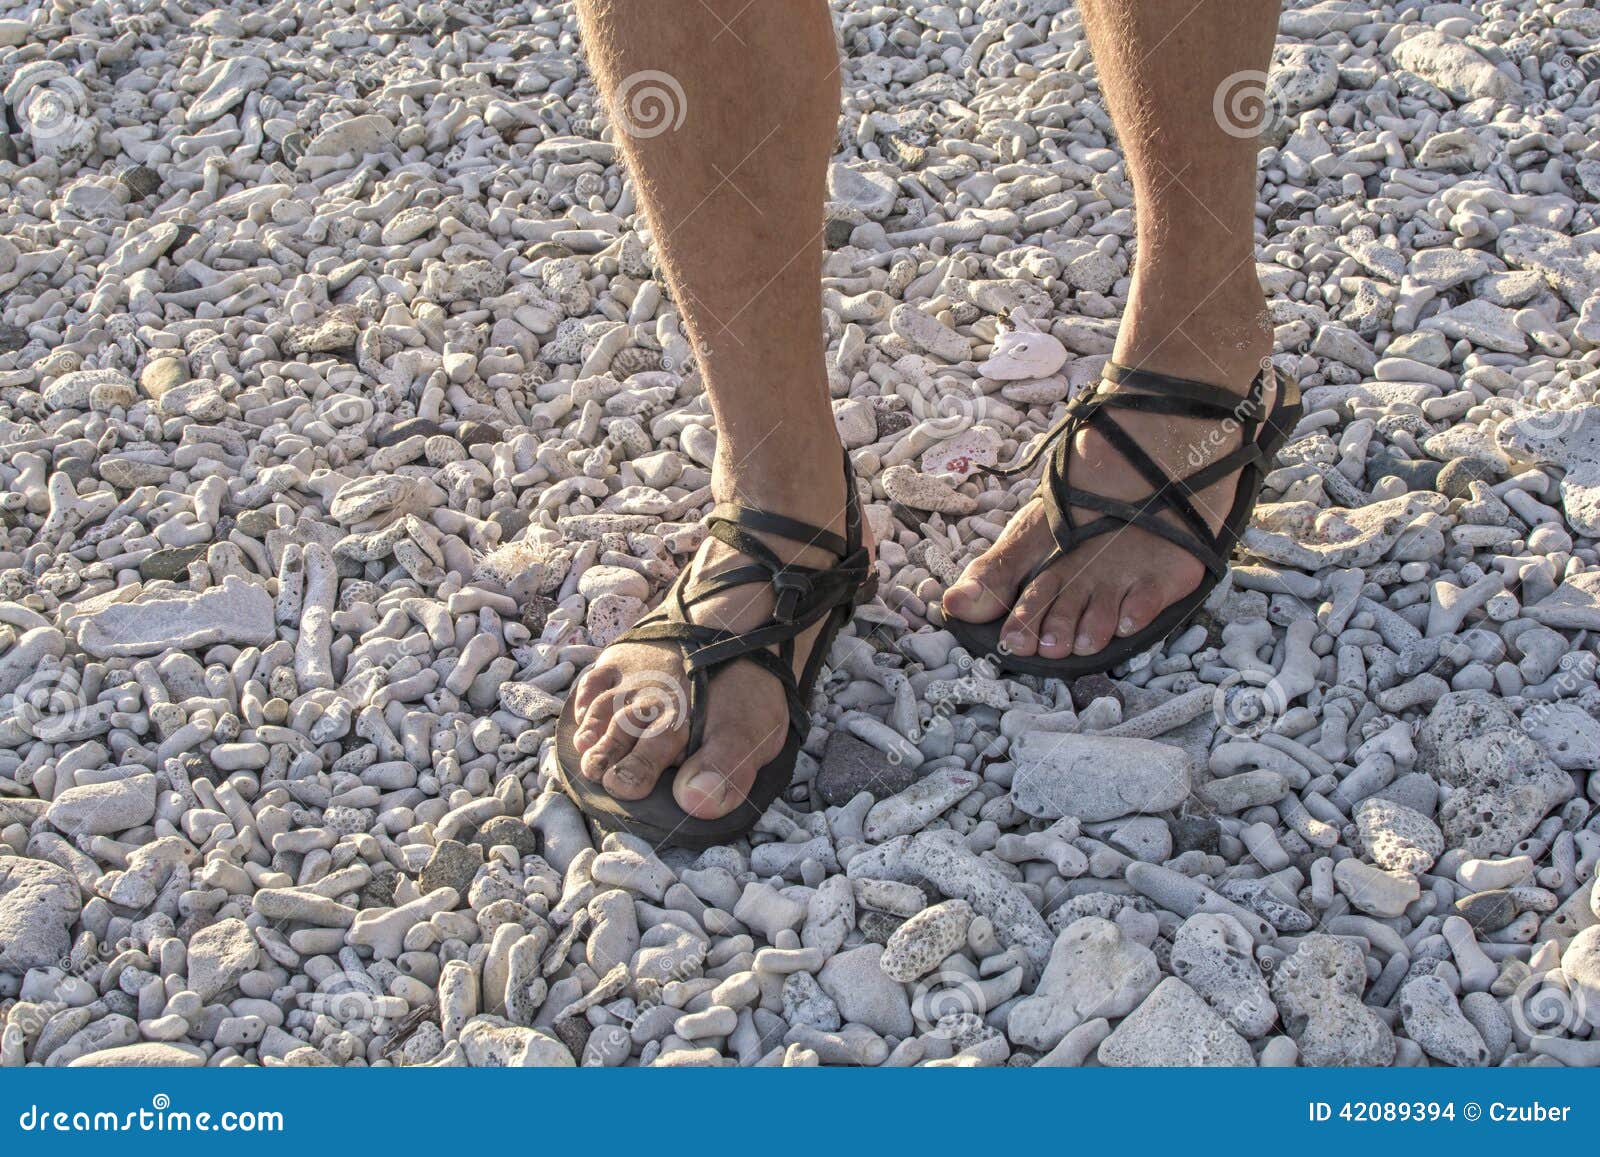 walking in sandals on beach